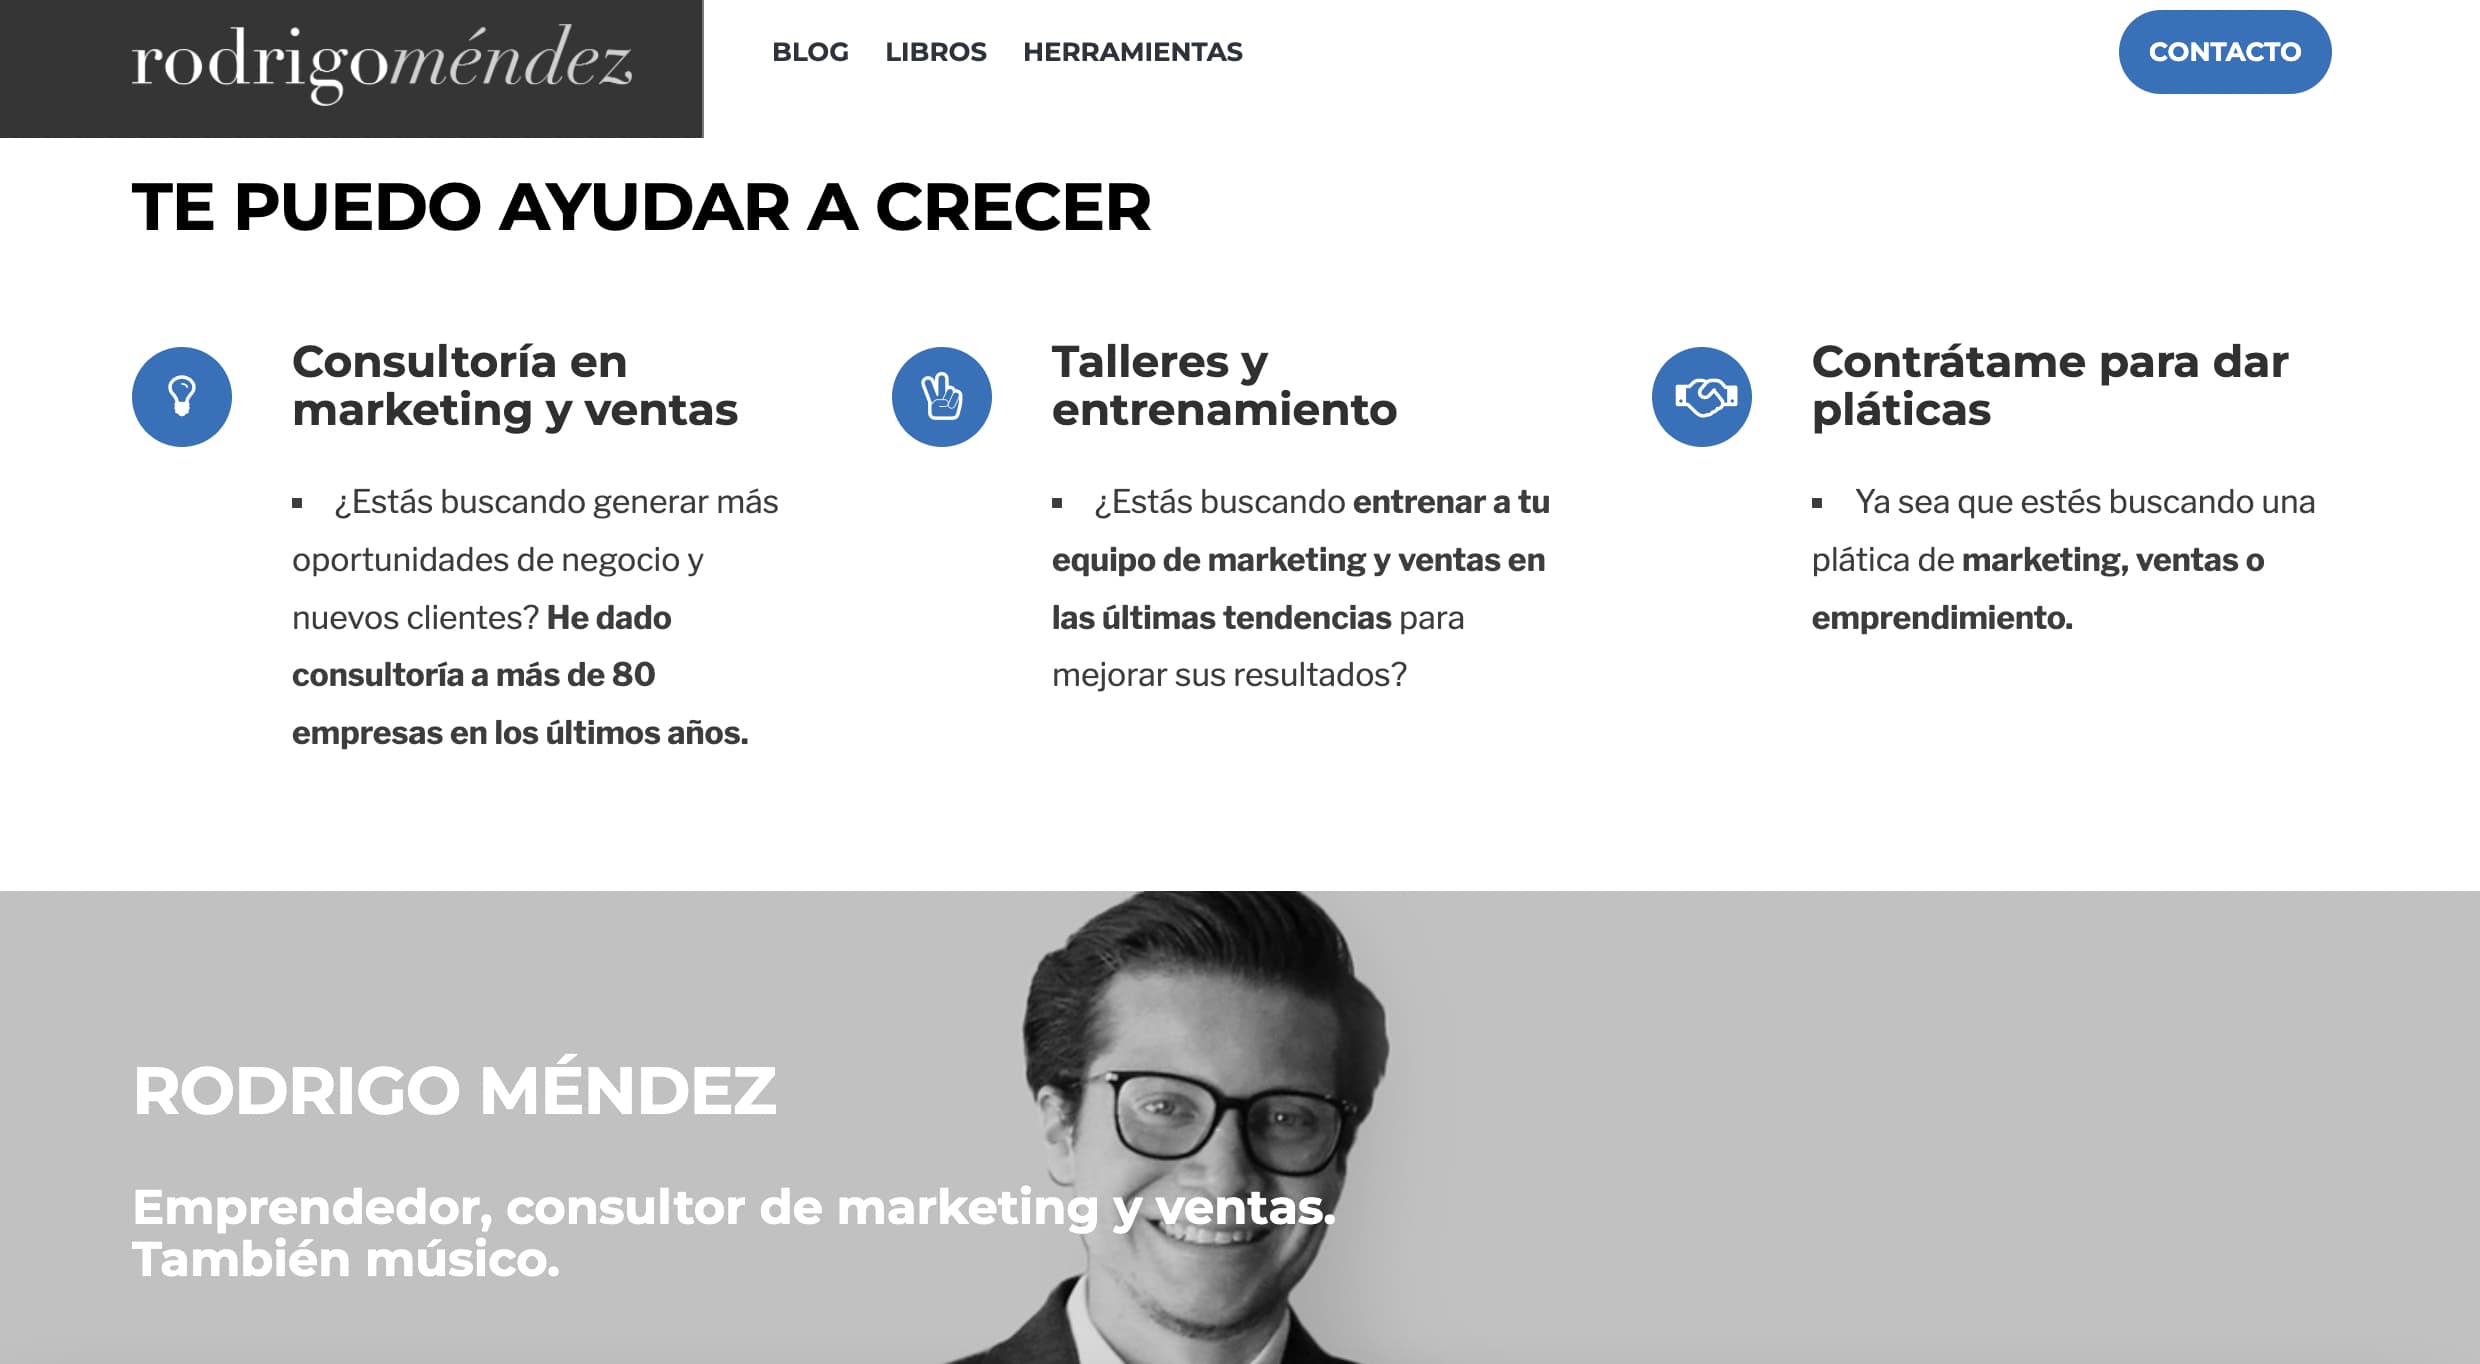 Ejemplo de infoproducto de Rodrigo Méndez